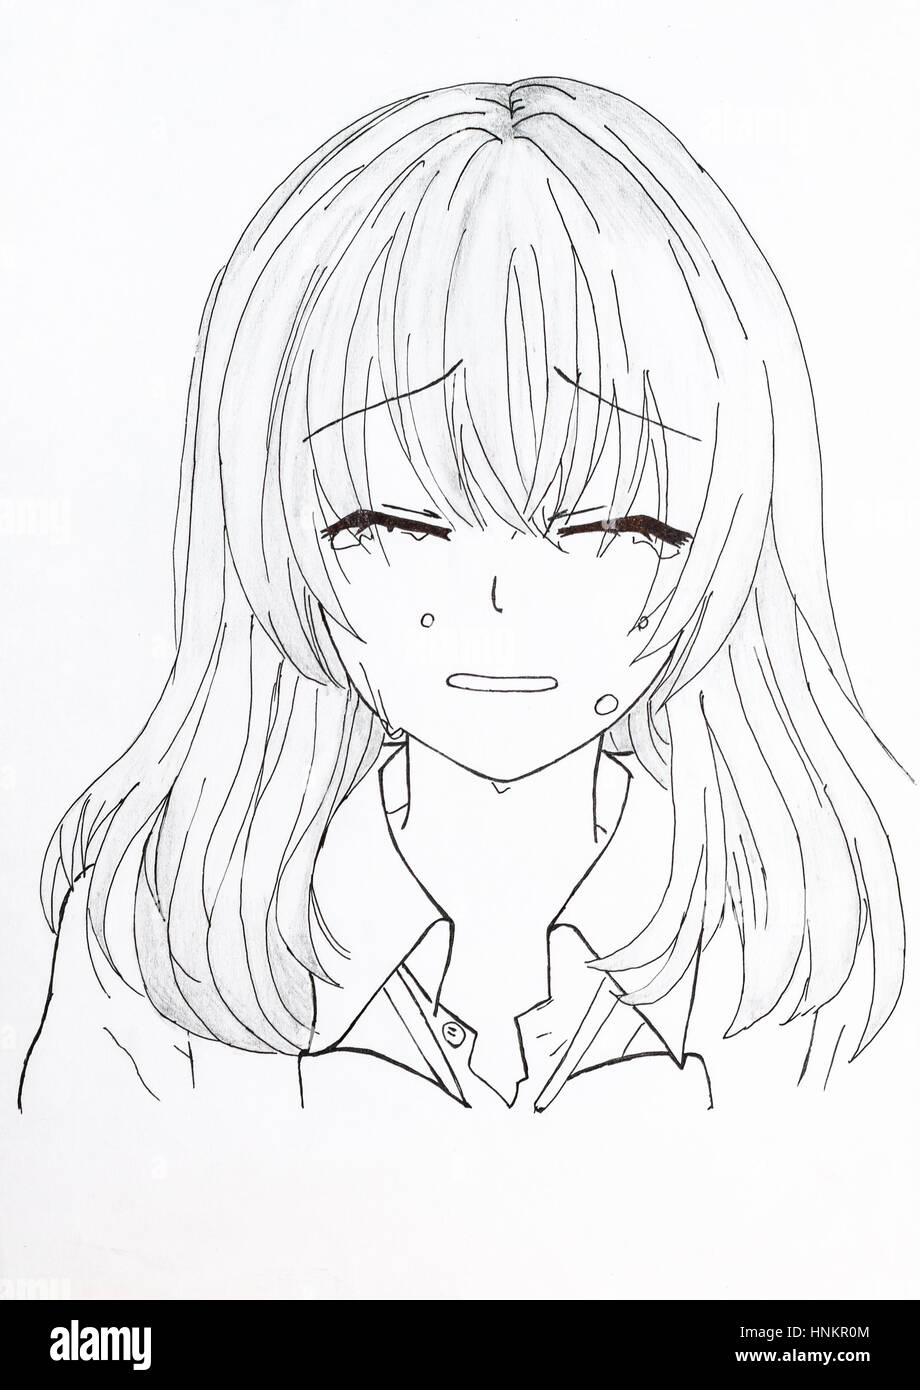 💤 . . . #anime #animation #handdrawnanimation #drawing #sketch  #2danimation #lineart | Instagram